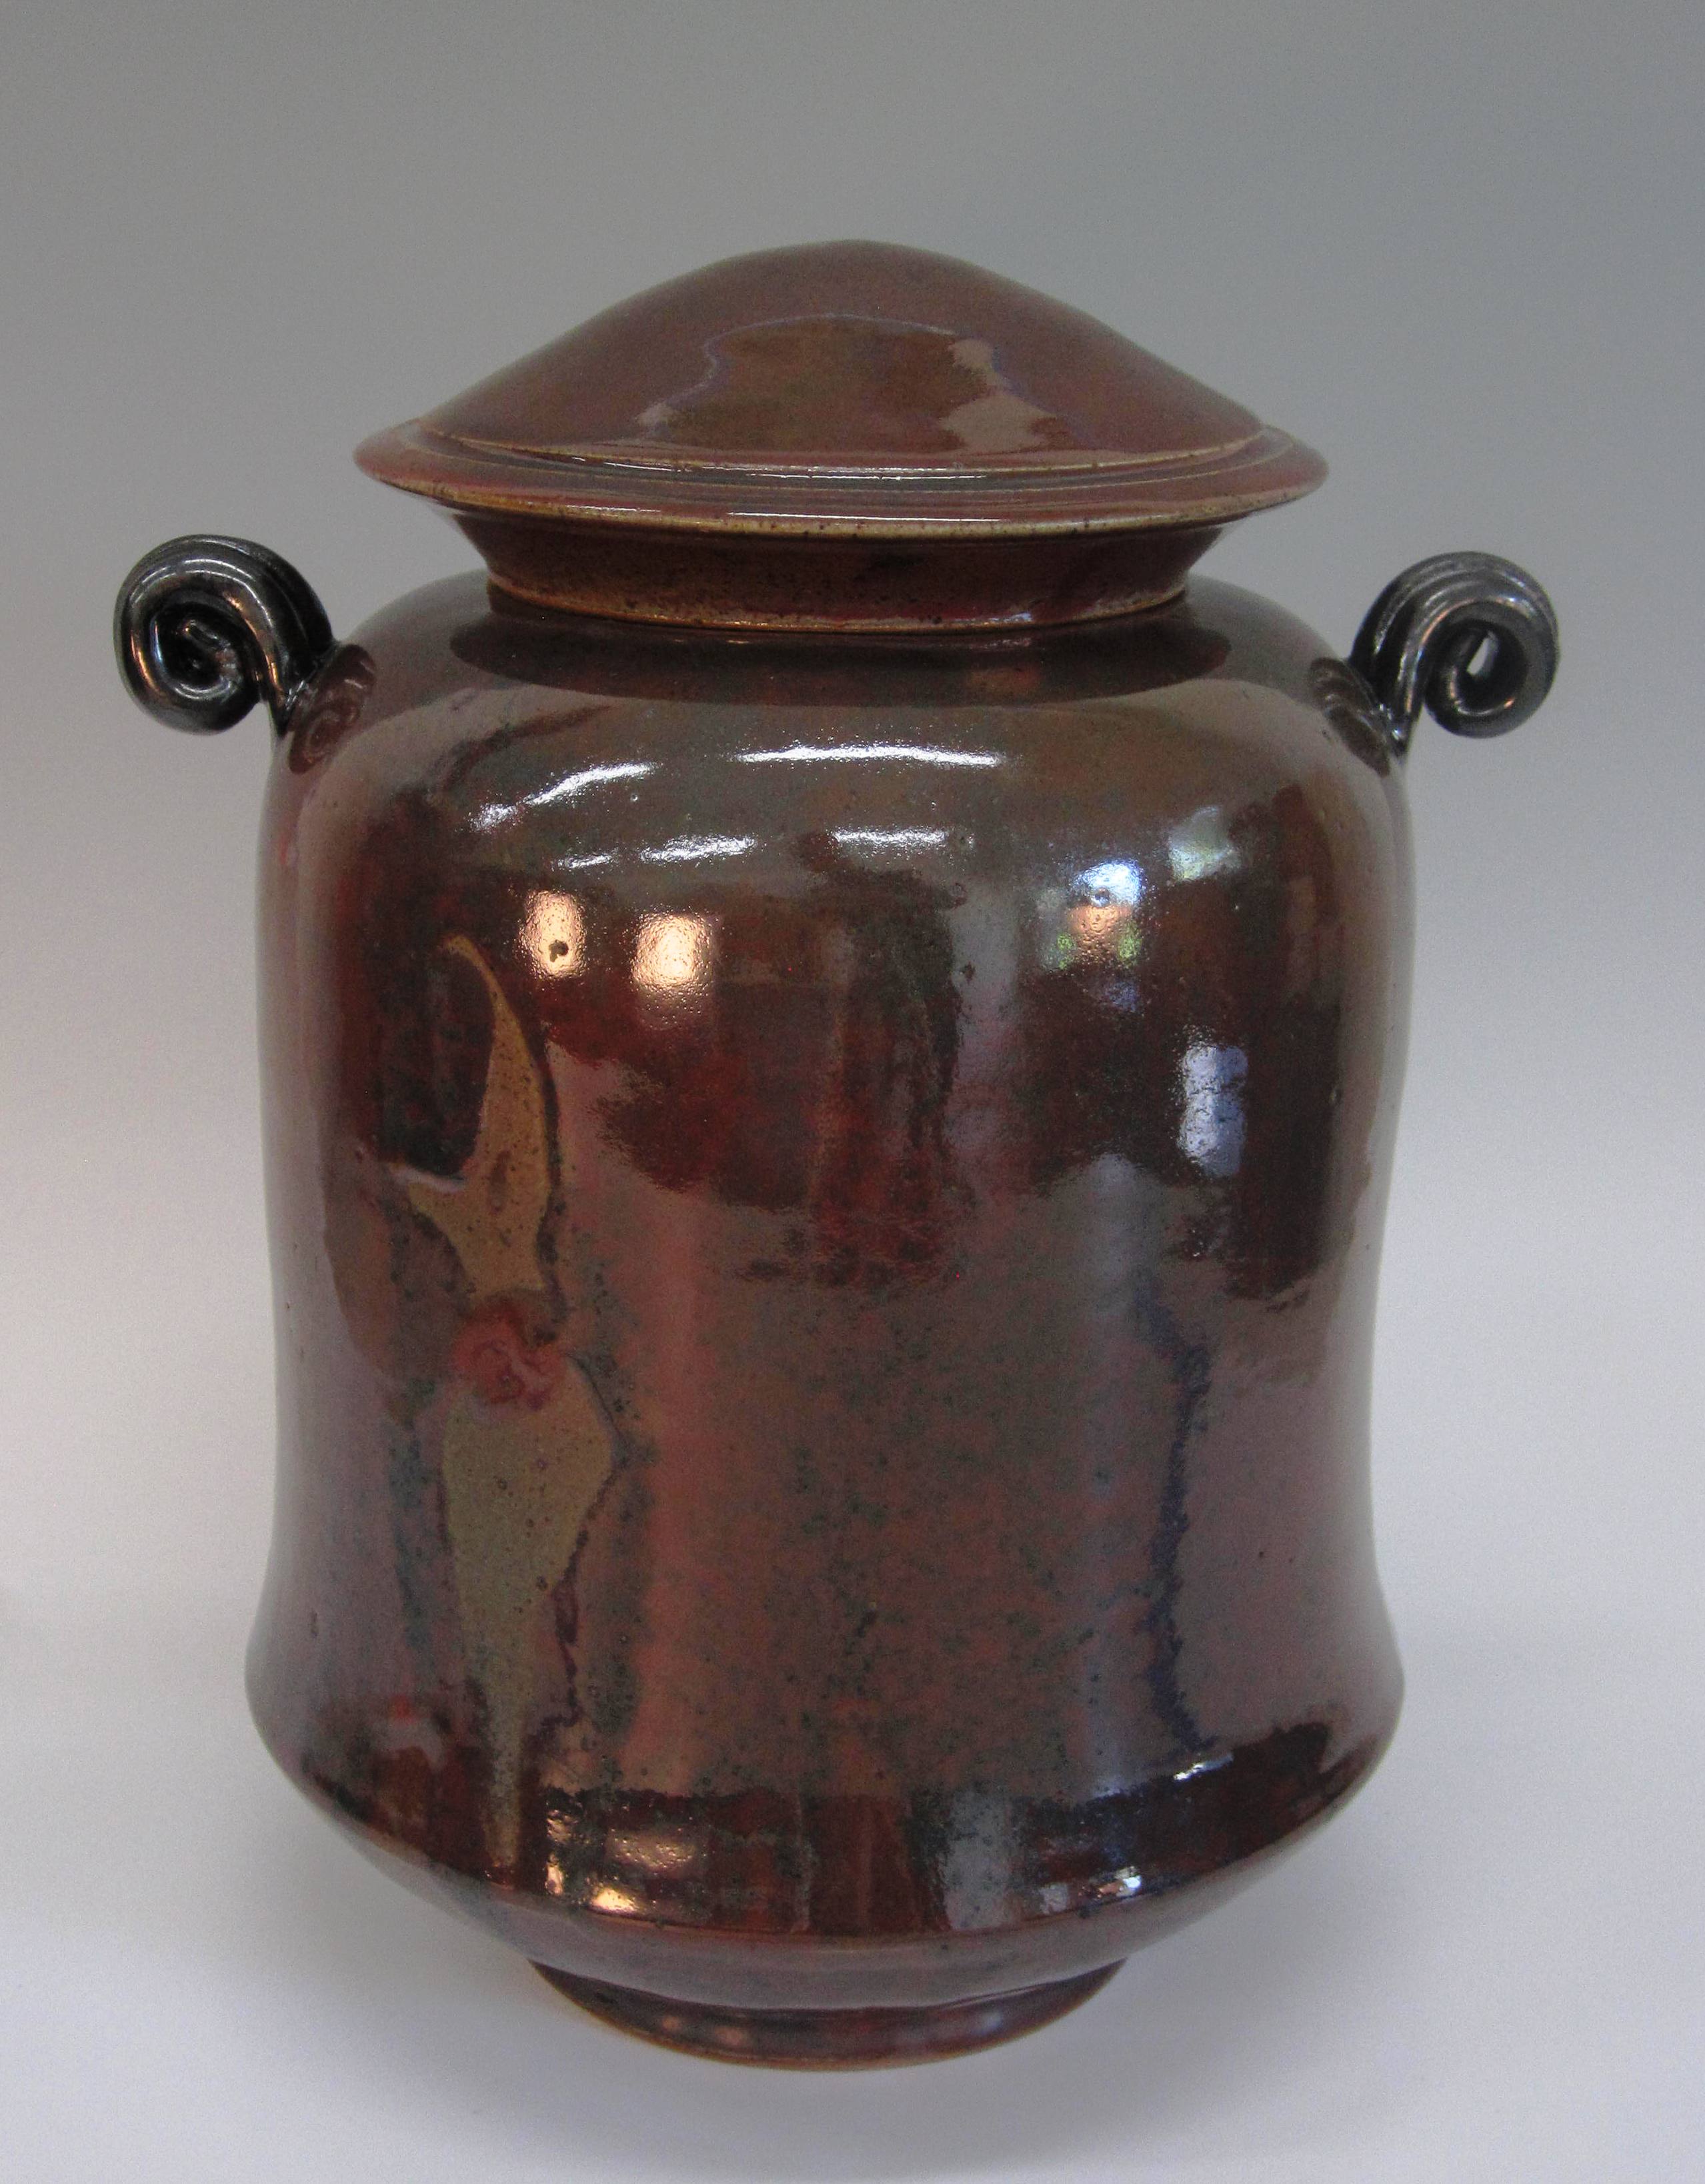 13.5" x 11" Jar with Lid item#254 $275